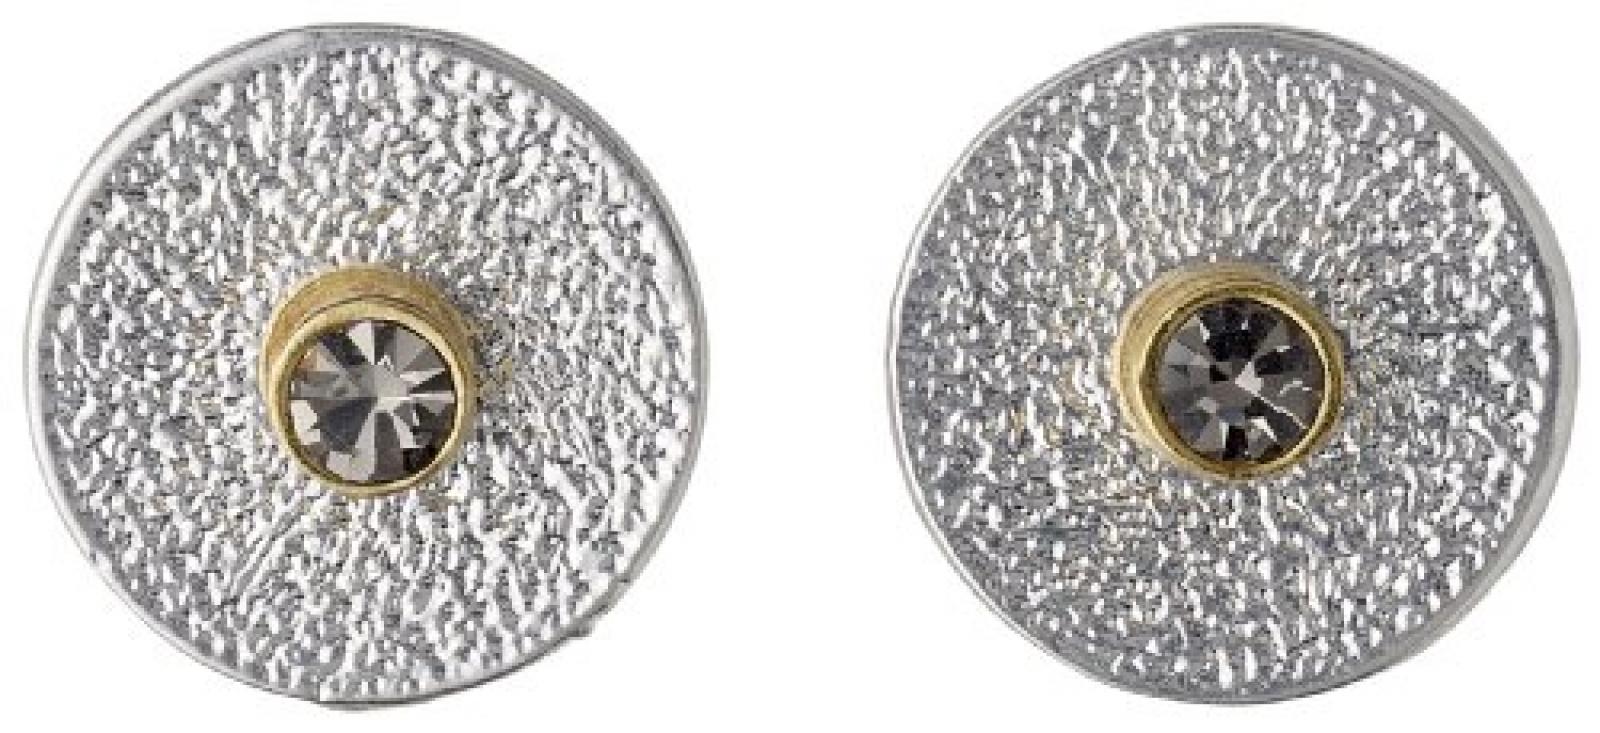 Pilgrim Jewelry Damen-Ohrstecker Messing Pilgrim Damen-Ohrstecker aus der Serie Disk post versilbert,grau 2 in 1 post earring ,1.2 cm in diameter cm 451336103 